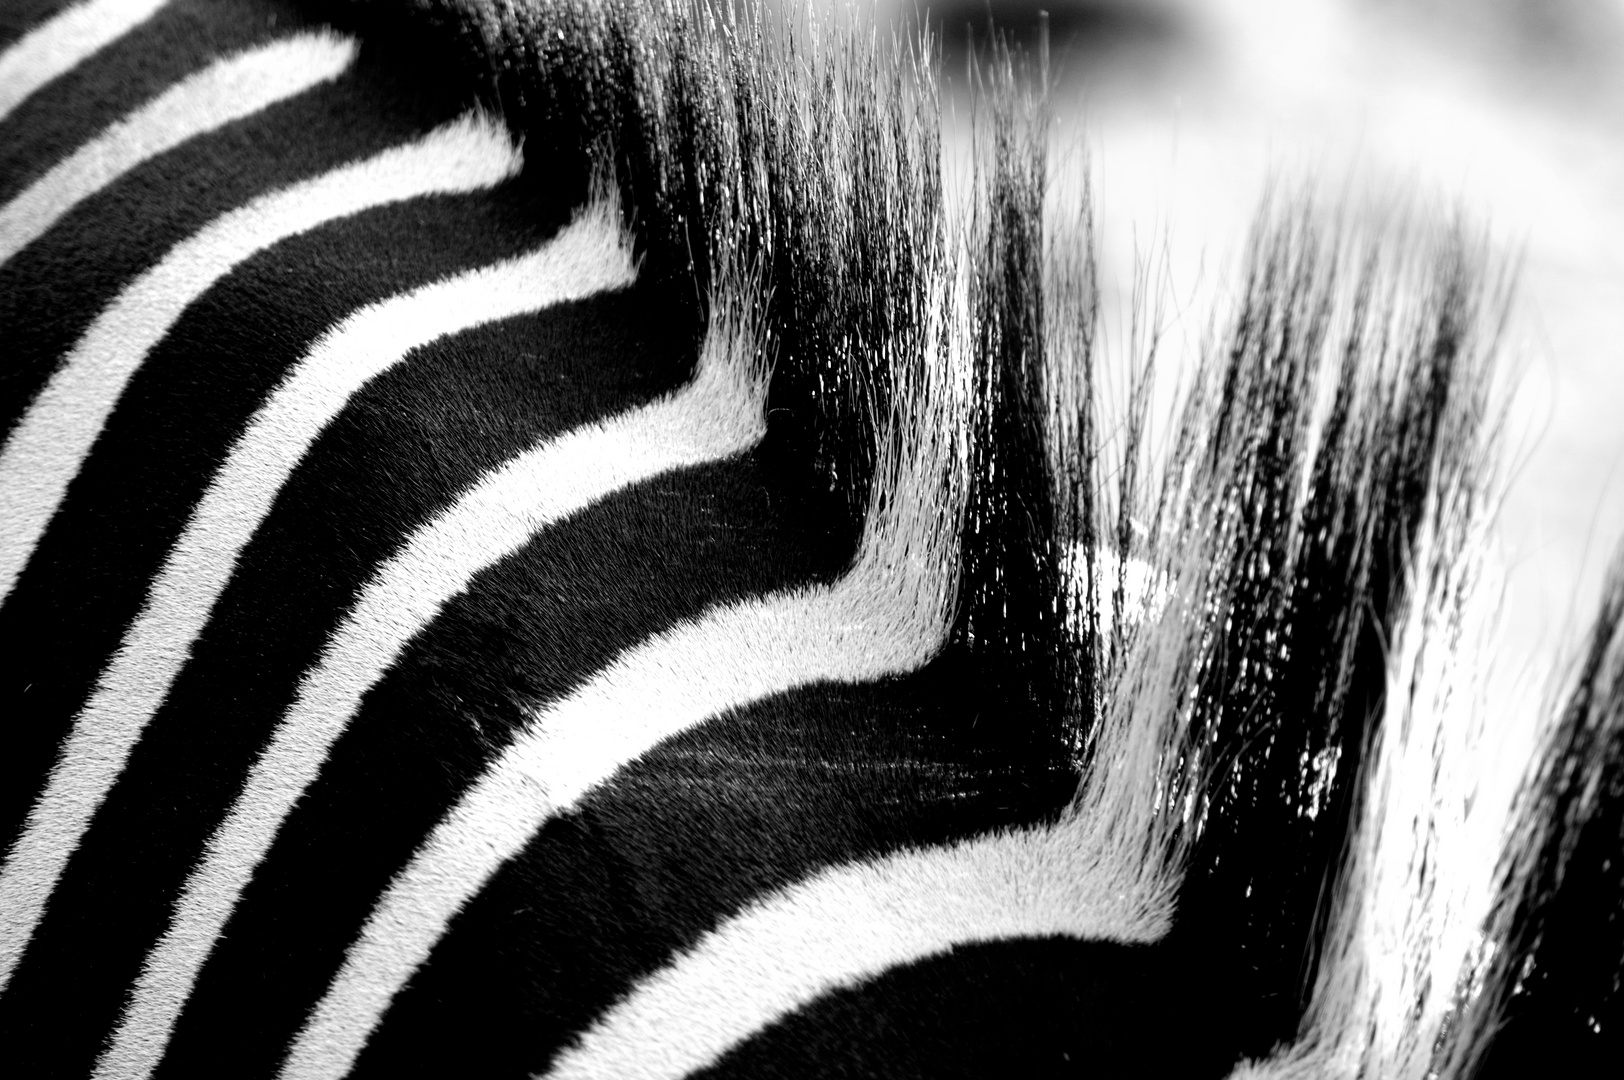 Zebra hautnah...